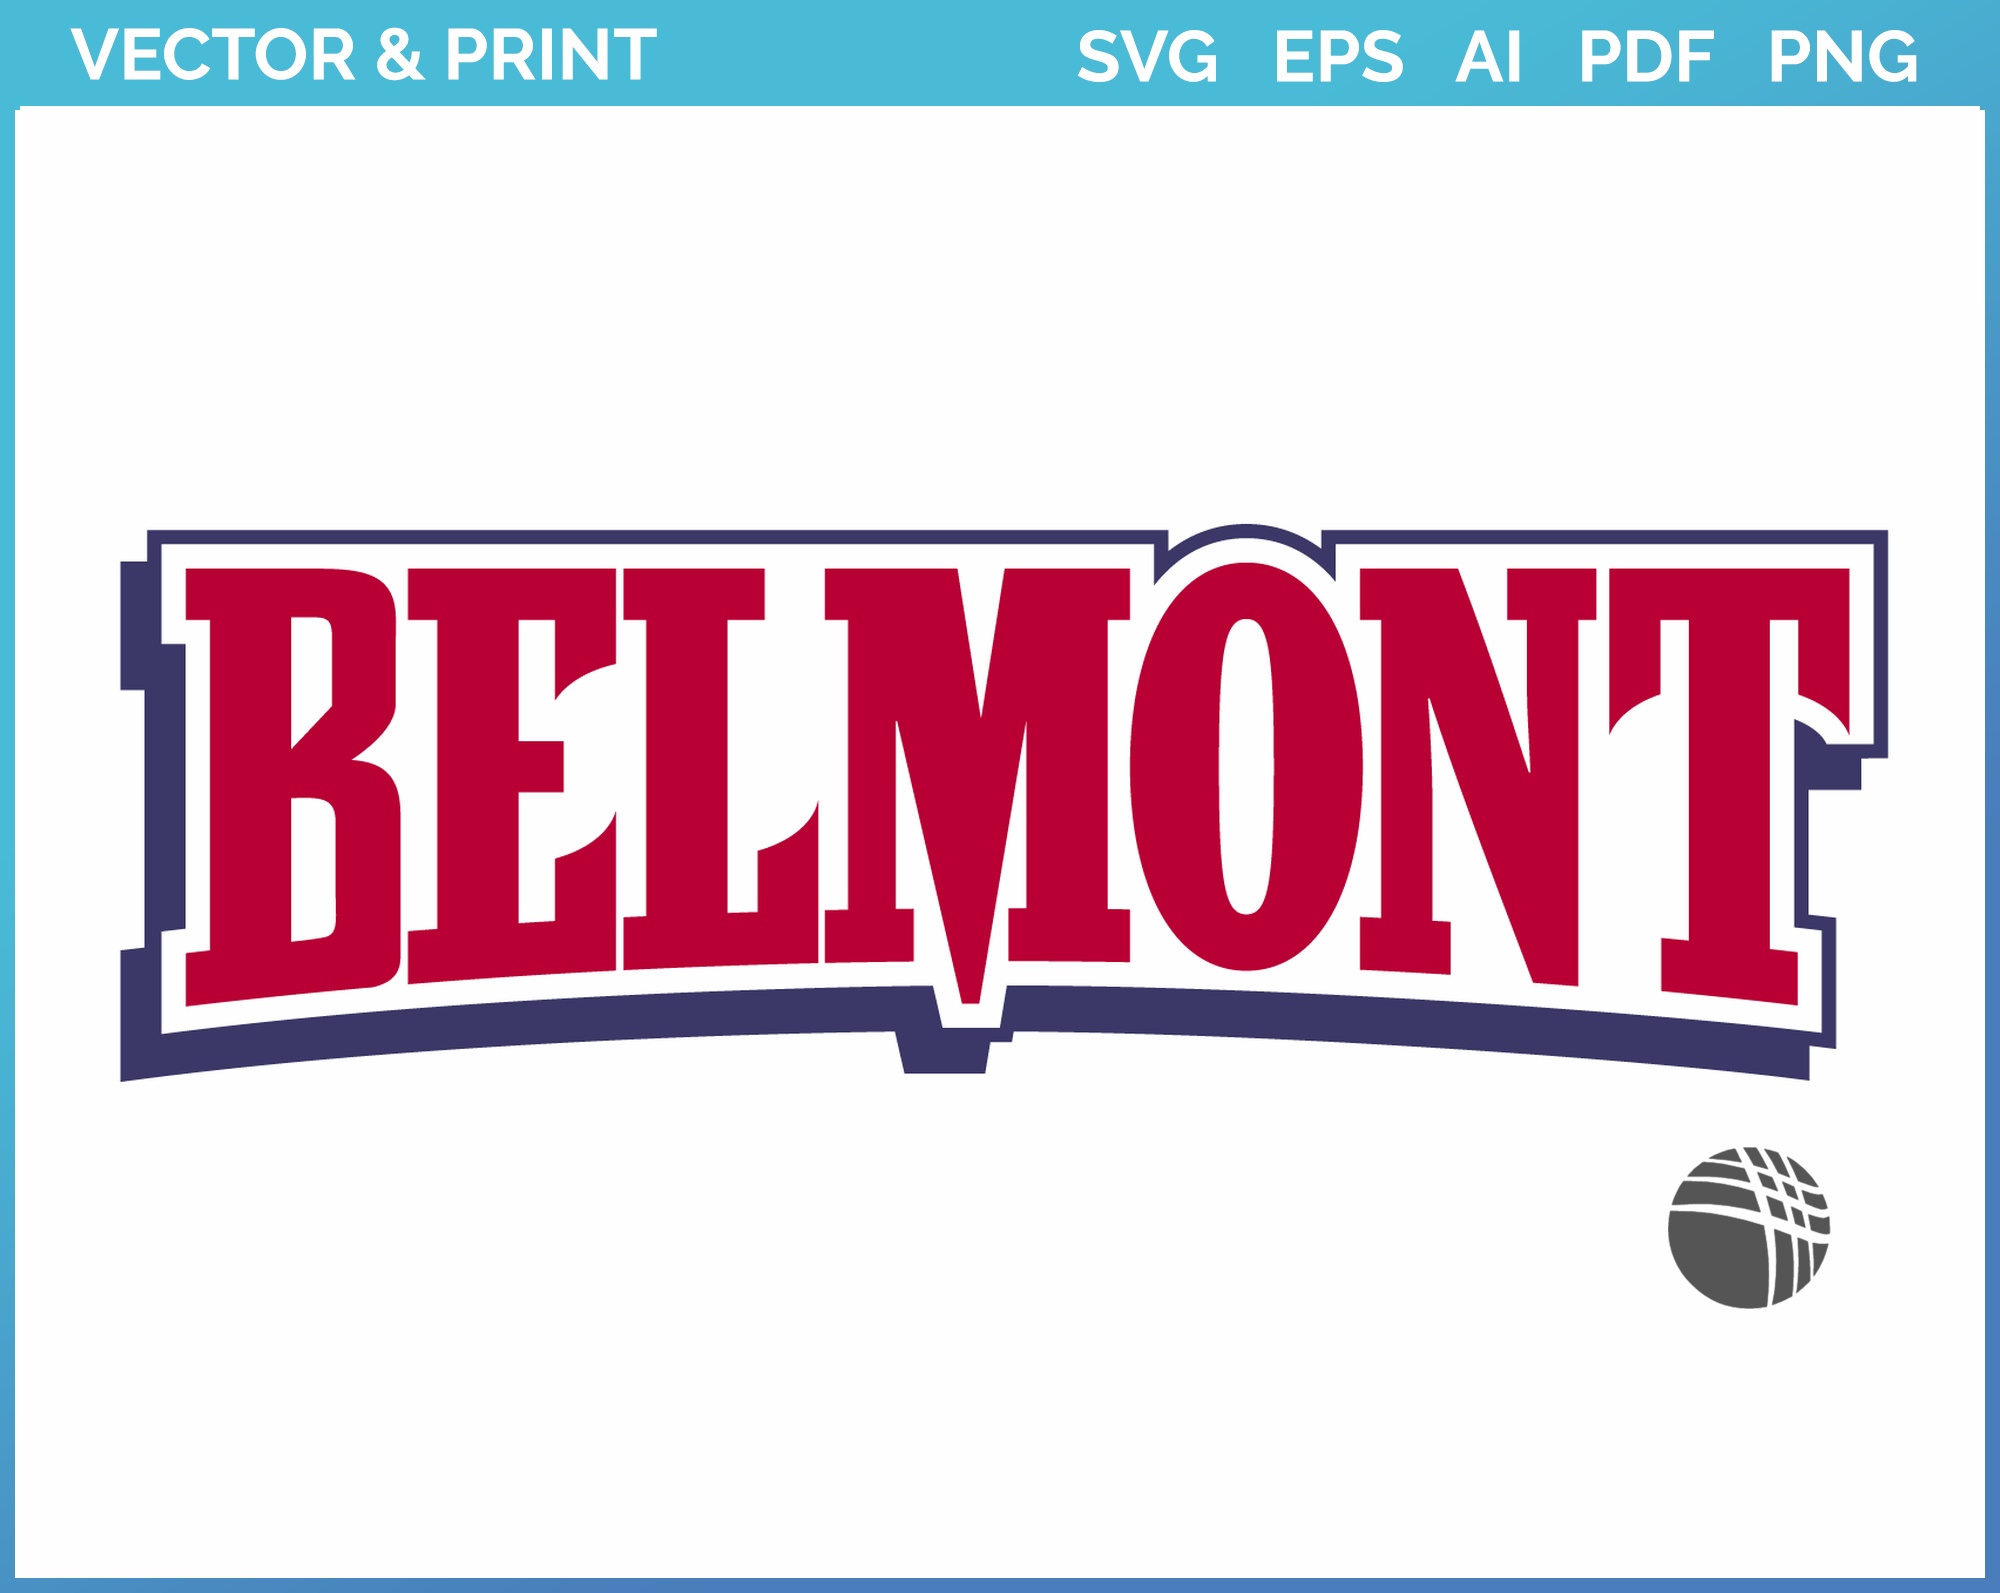 Belmond Logo PNG Vectors Free Download